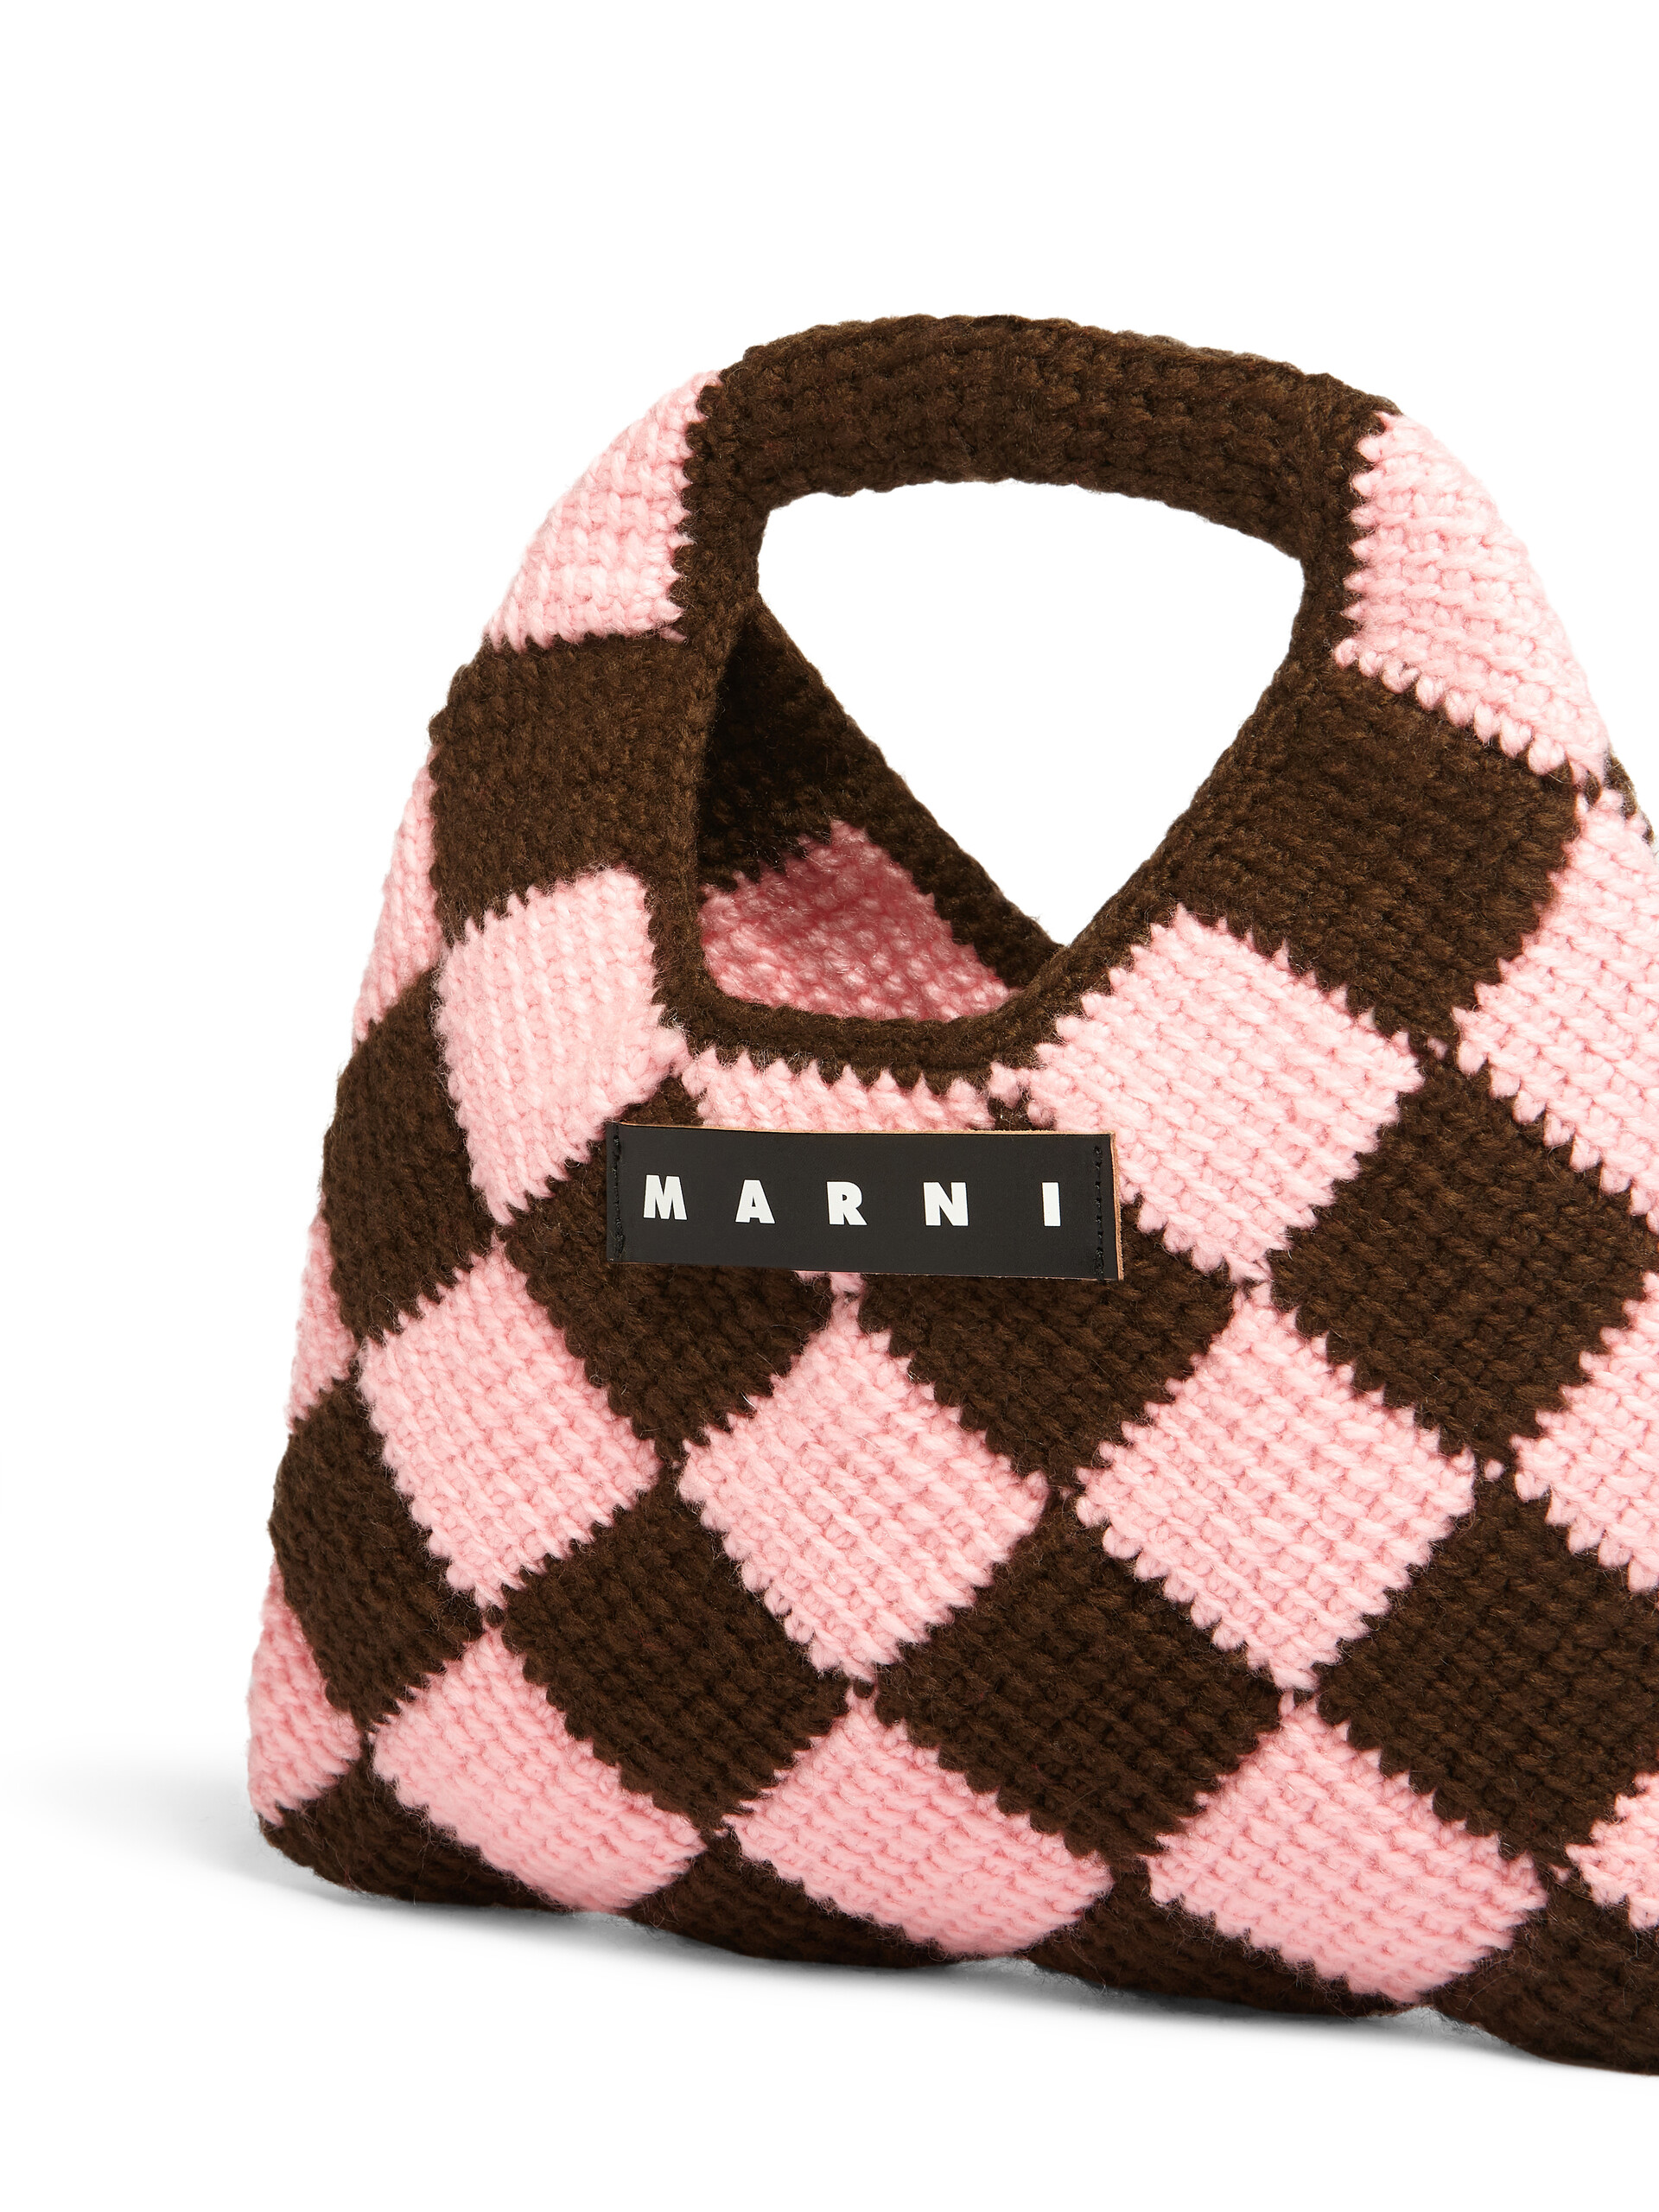 Small brown and pink tech wool MARNI MARKET bag - Bags - Image 4